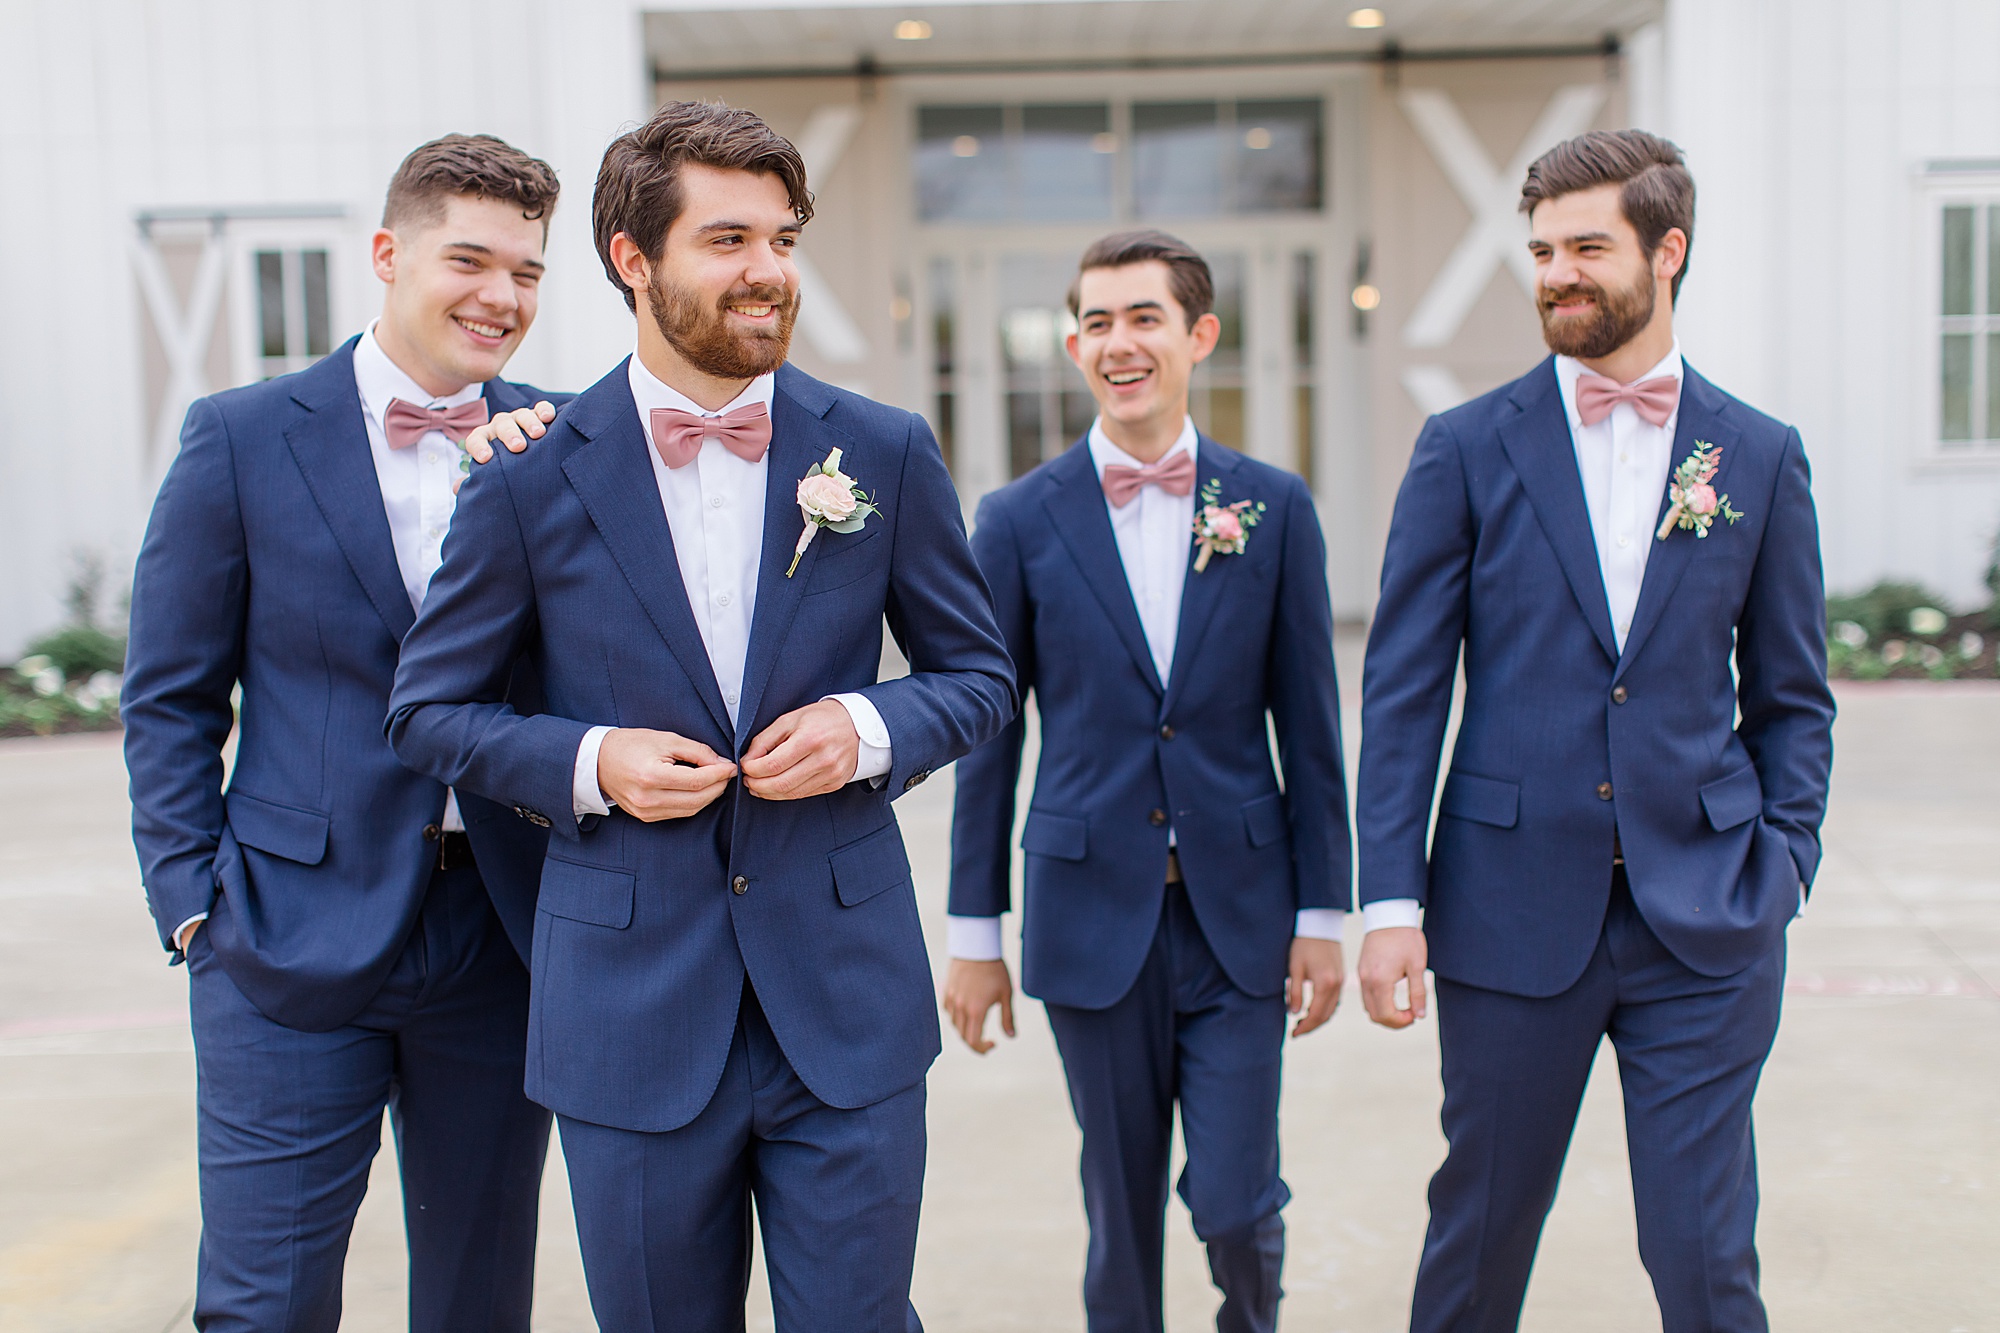 groom walks with groomsmen in navy suits before wedding in Texas